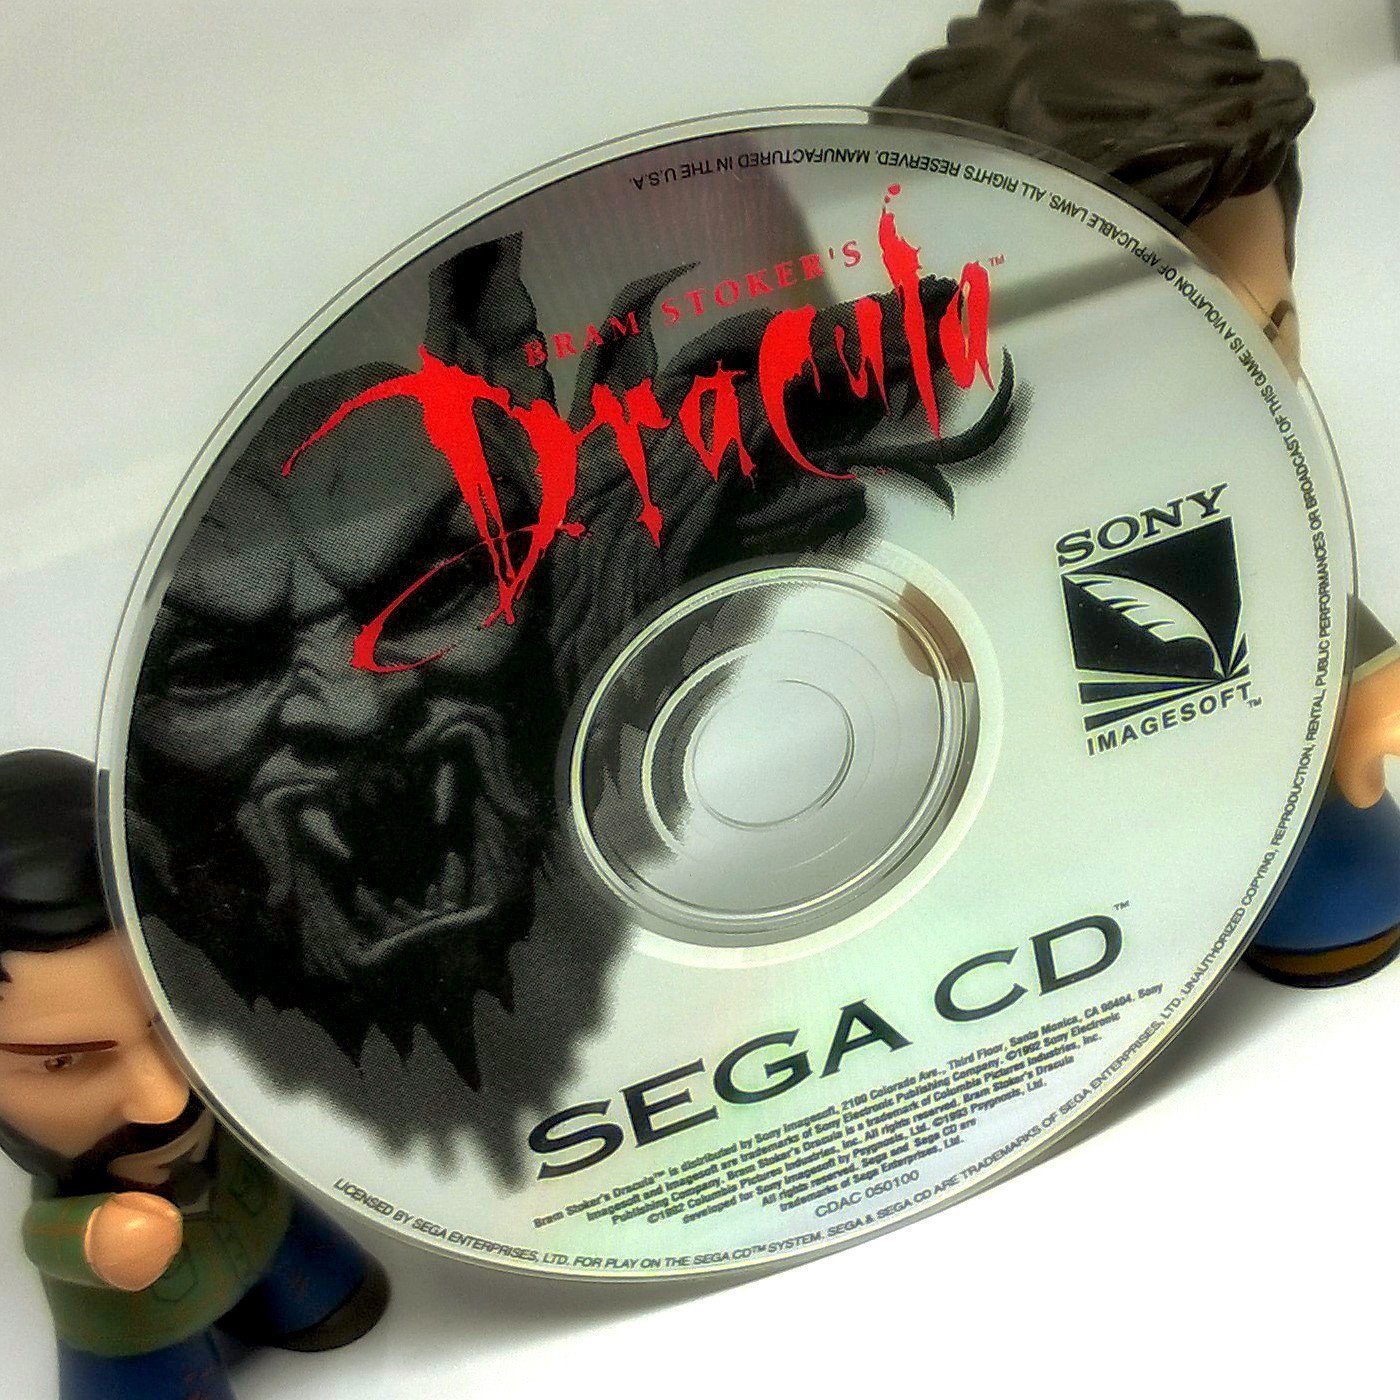 Bram Stoker's Dracula Sega CD Game